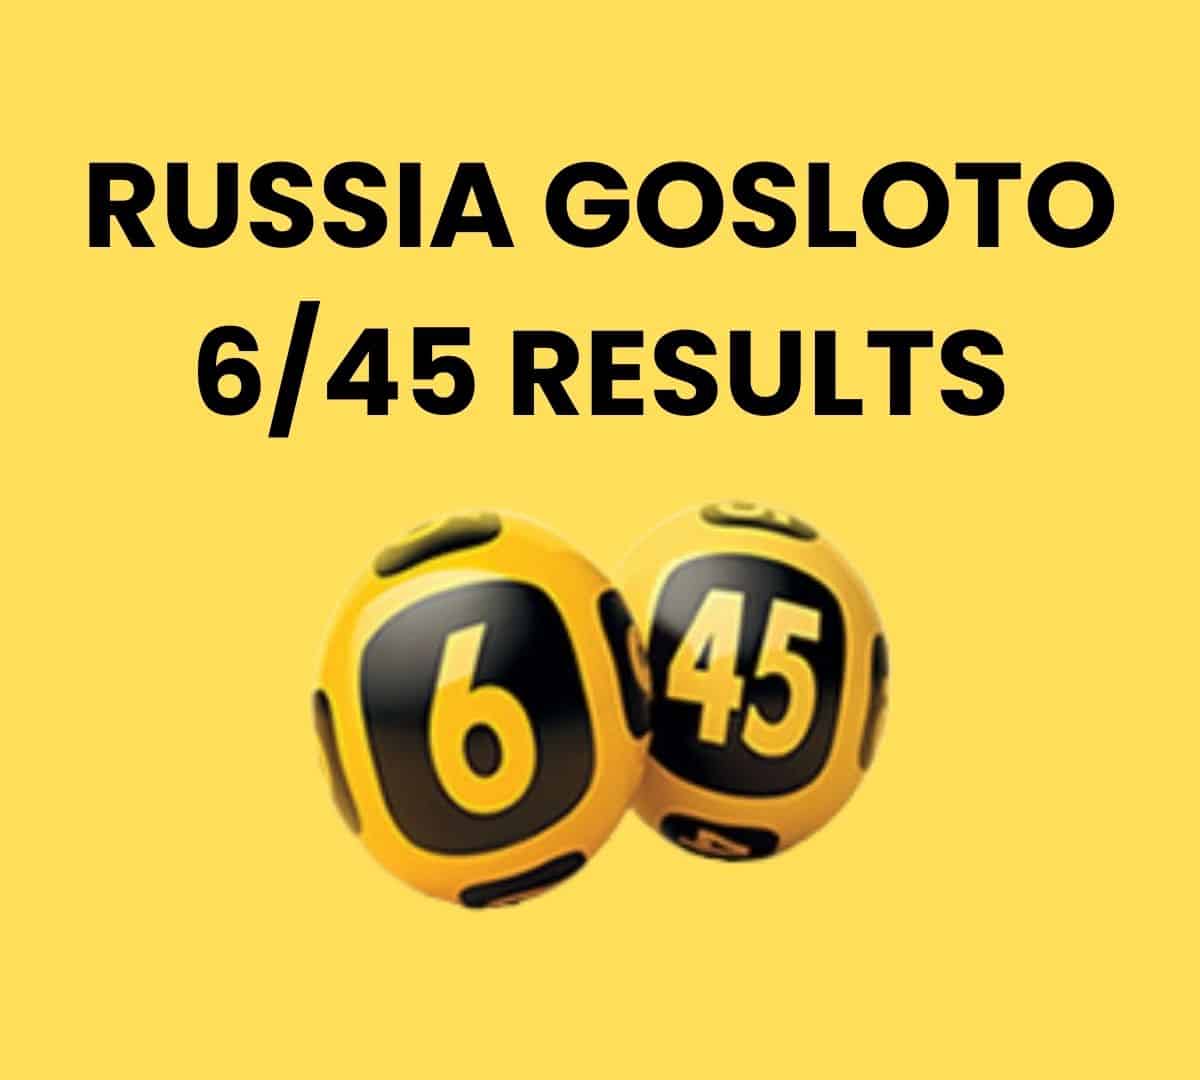 gosloto-645-result.jpg